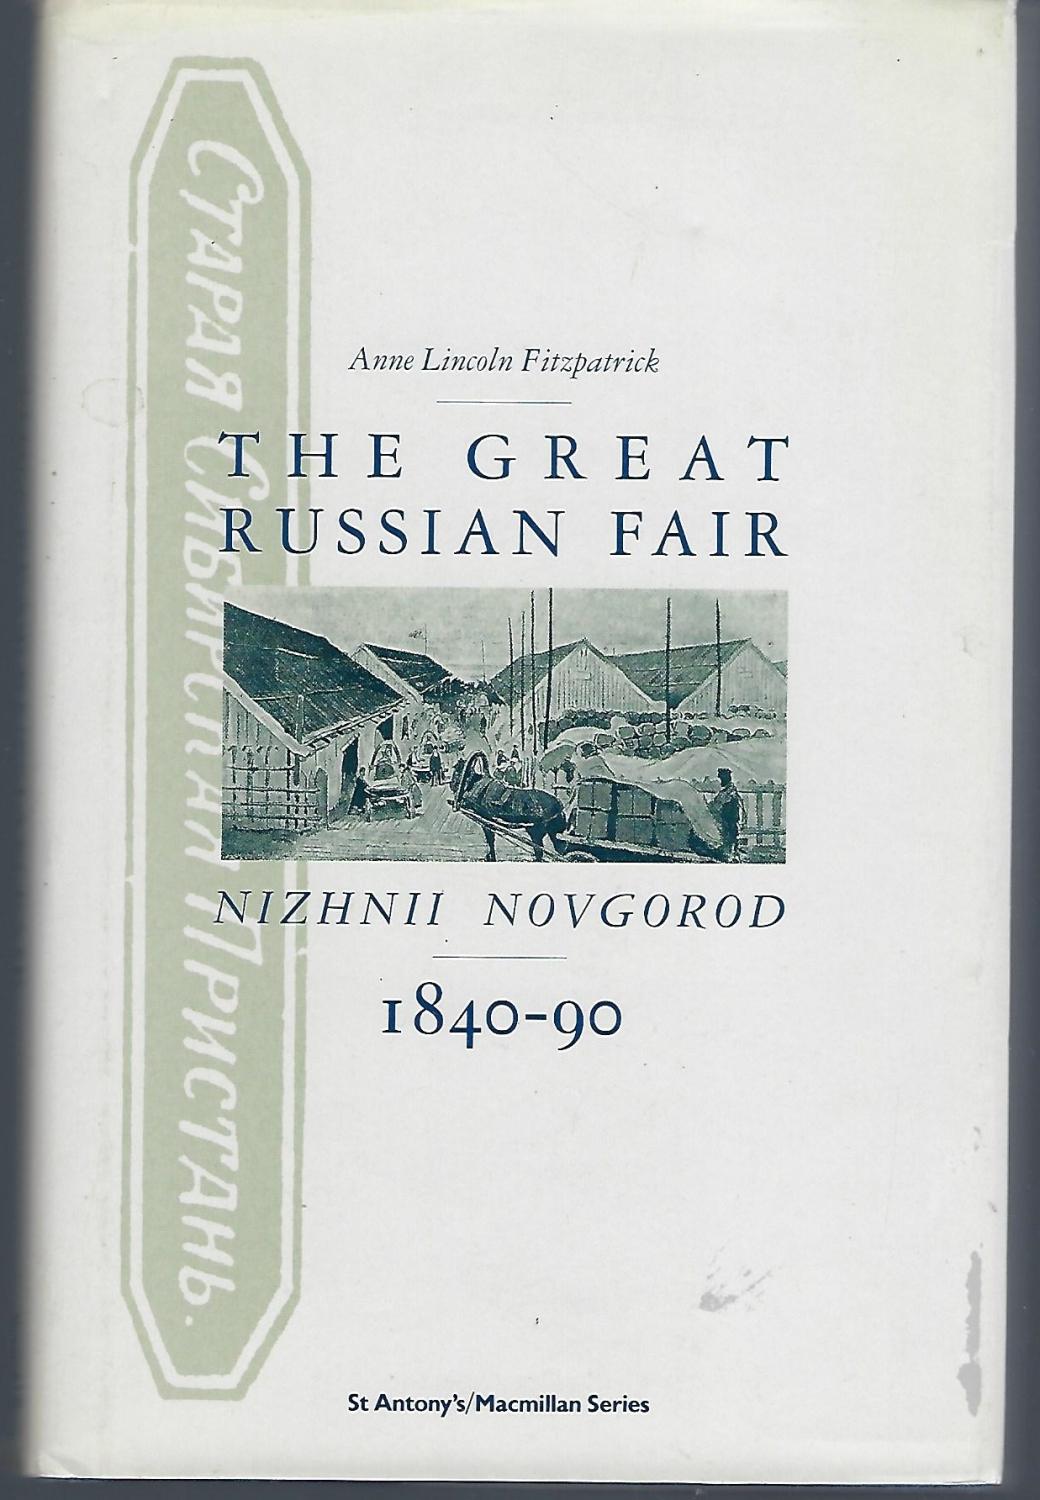 The Great Russian Fair: Nizhnii Novgorod, 1840-90 (St Antony's Series) - Fitzpatrick, Anne Lincoln